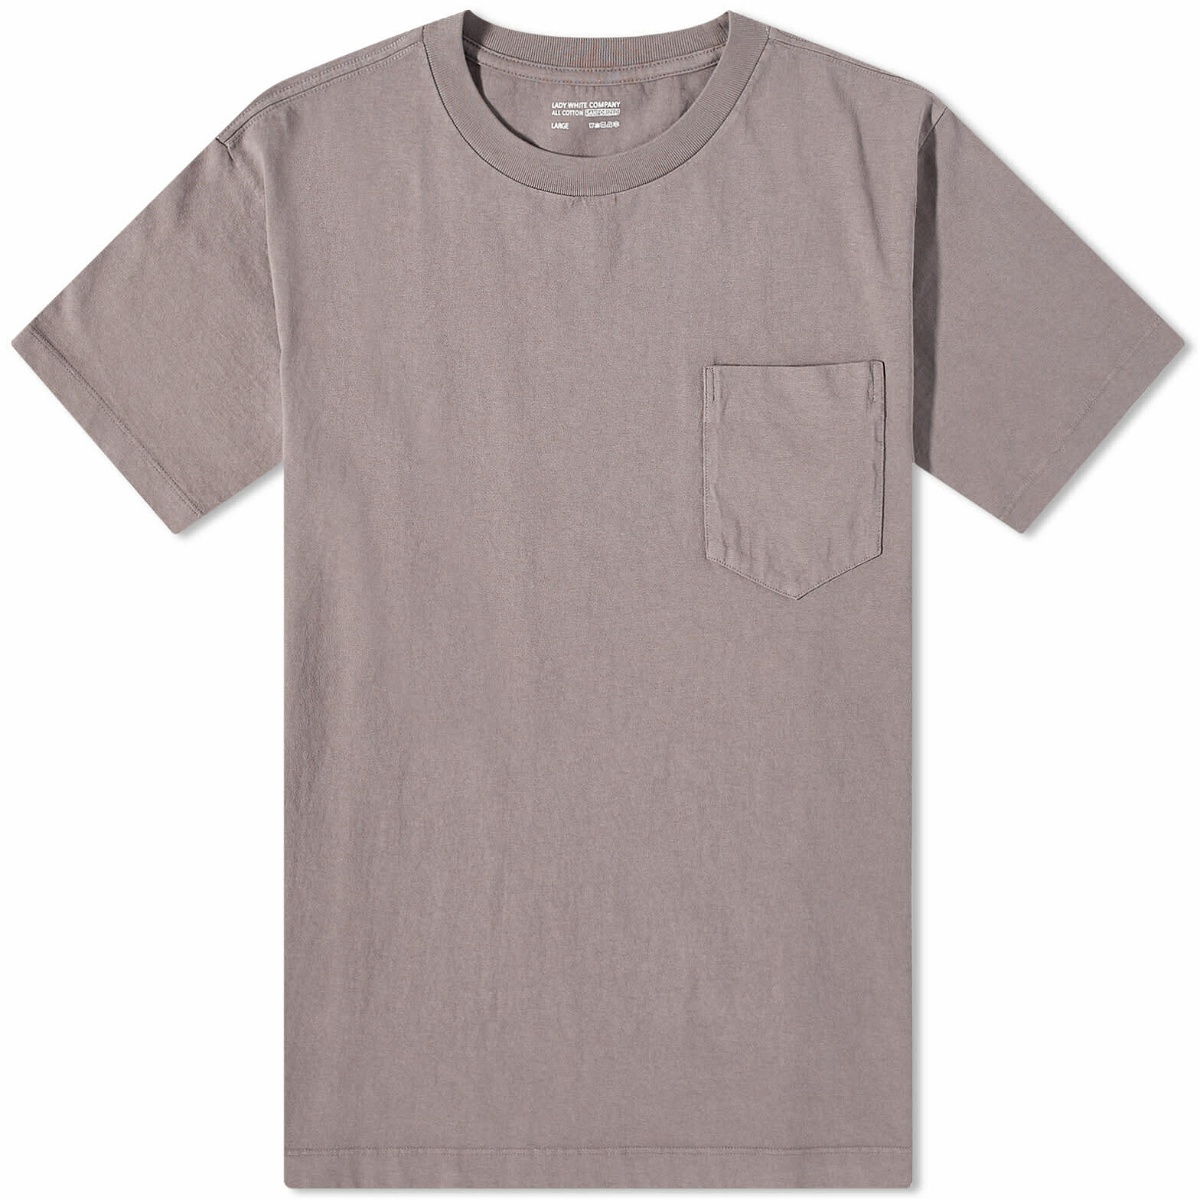 Lady White Co. Men's Balta Pocket T-Shirt in Dust Grey Lady White Co.